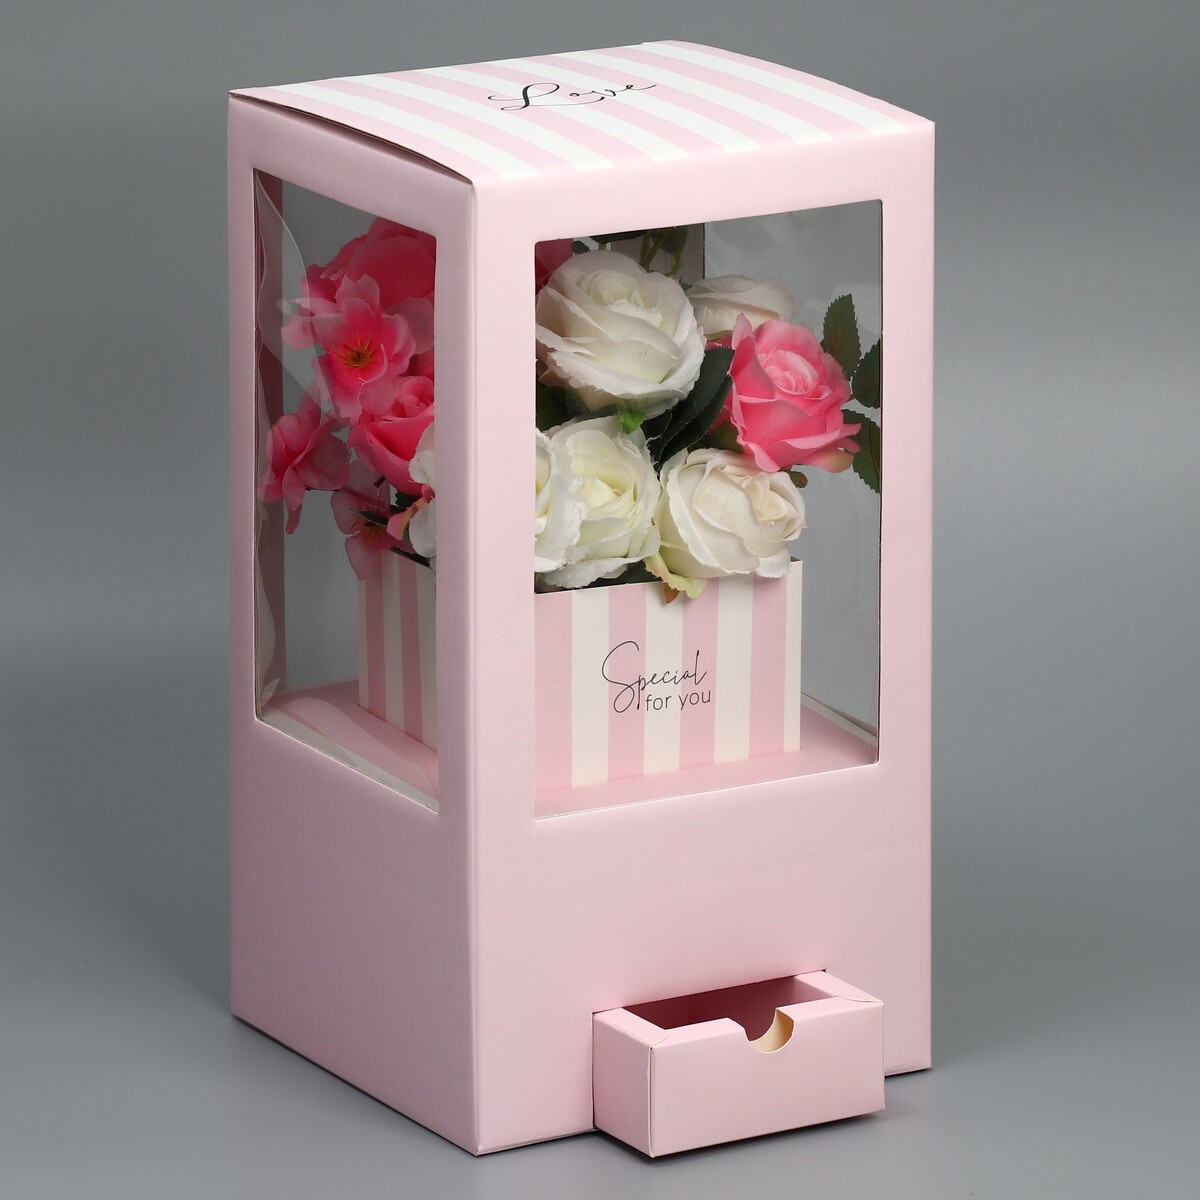 Коробка подарочная для цветов с вазой из мгк складная, упаковка, коробка для ов с вазой и pvc окнами складная 23 х 30 х 23 см